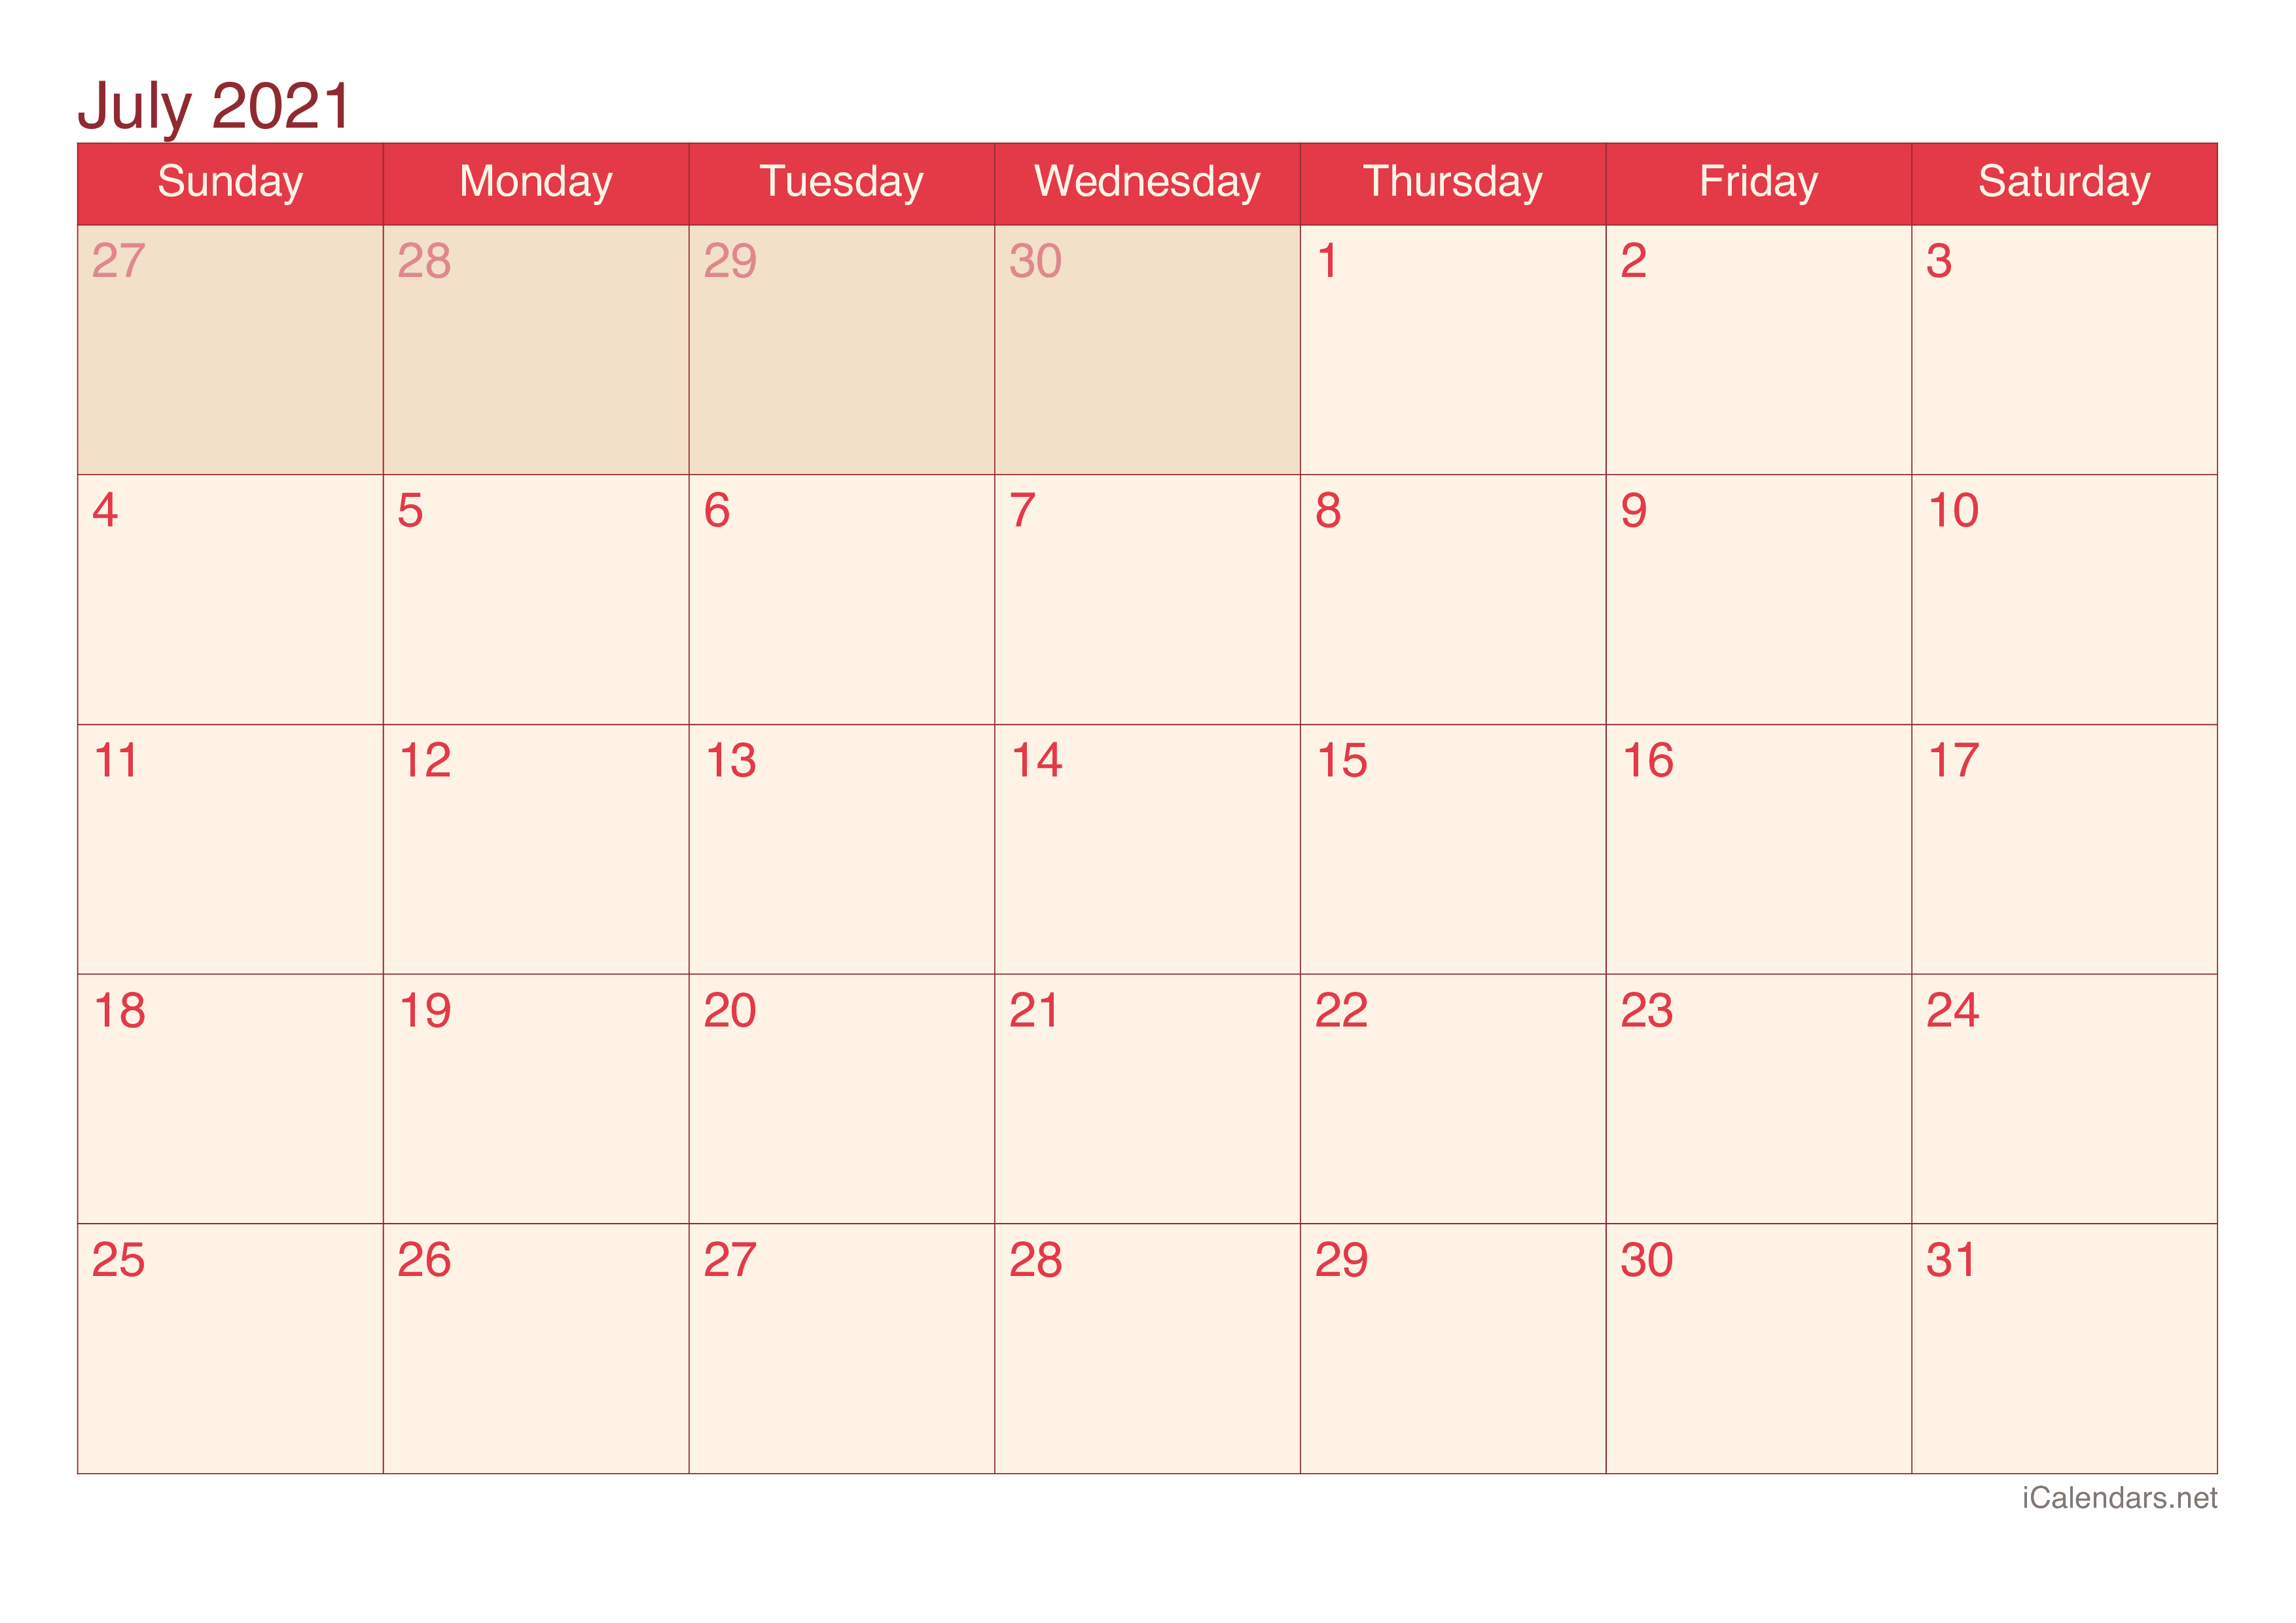 2021 July Calendar - Cherry